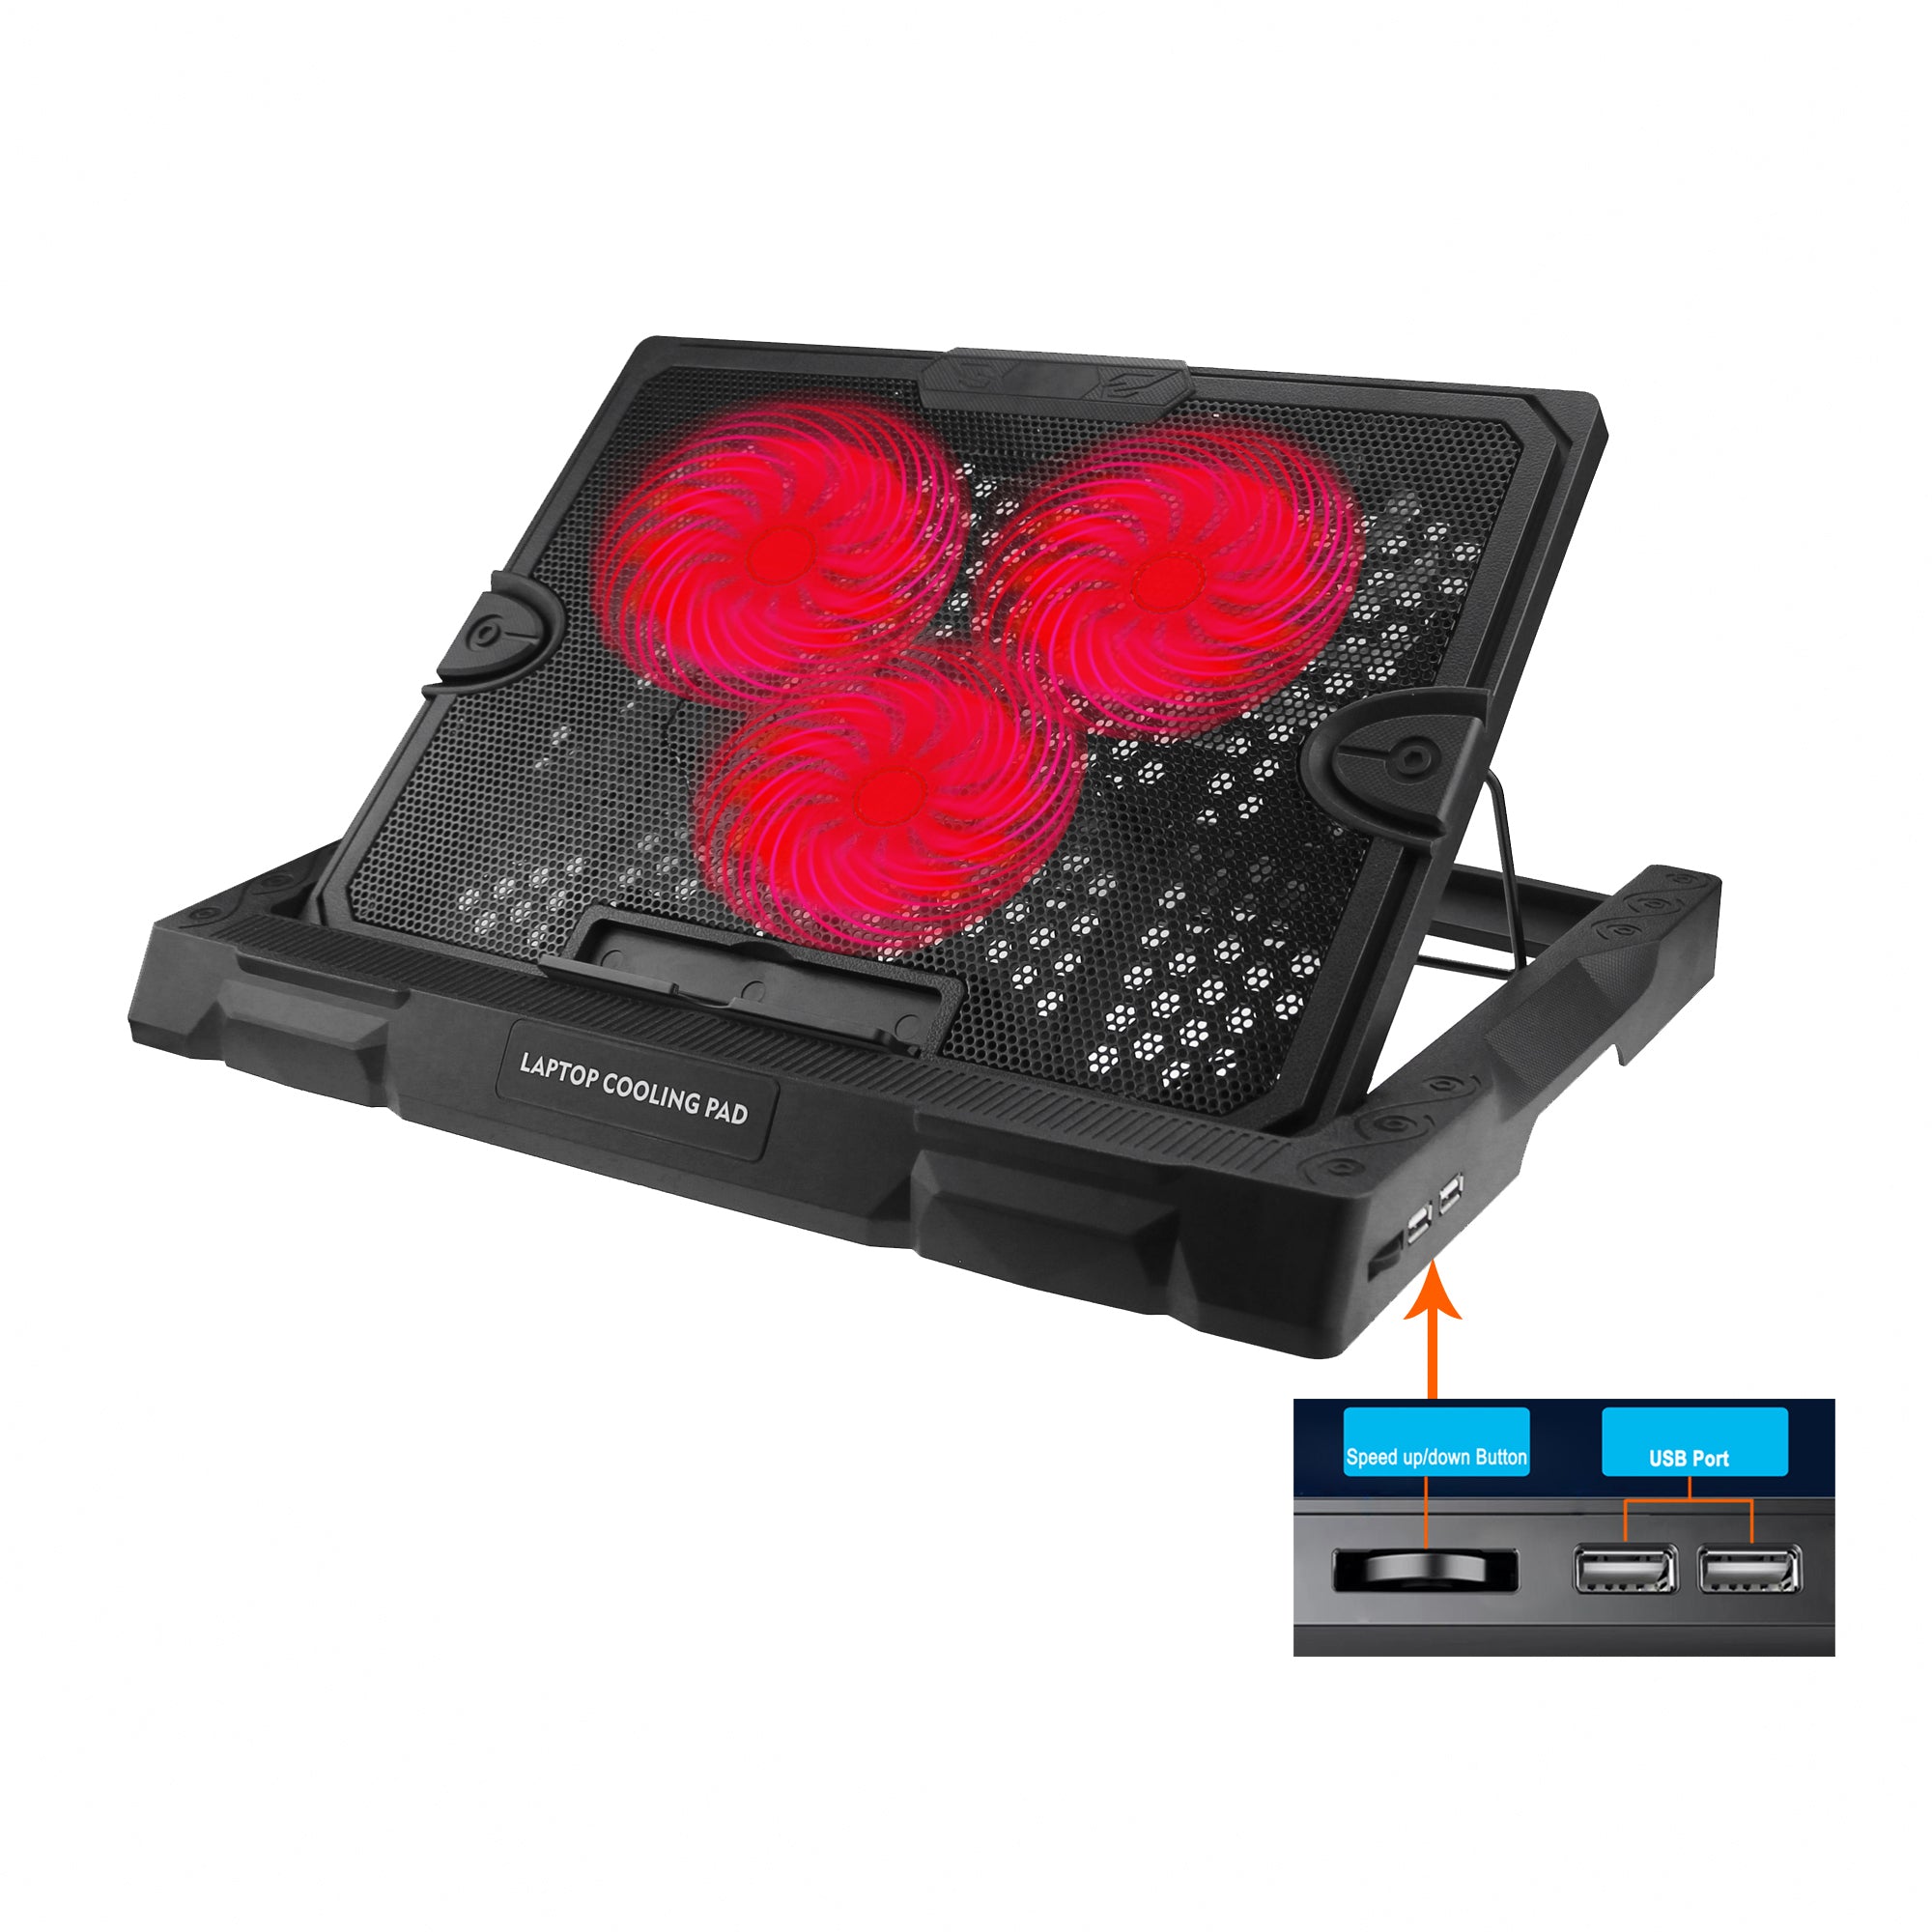 S300 3-Fan Laptop Cooling Stand Desktop Adjustable Wind Speed Notebook Fan Cooler - Red Light